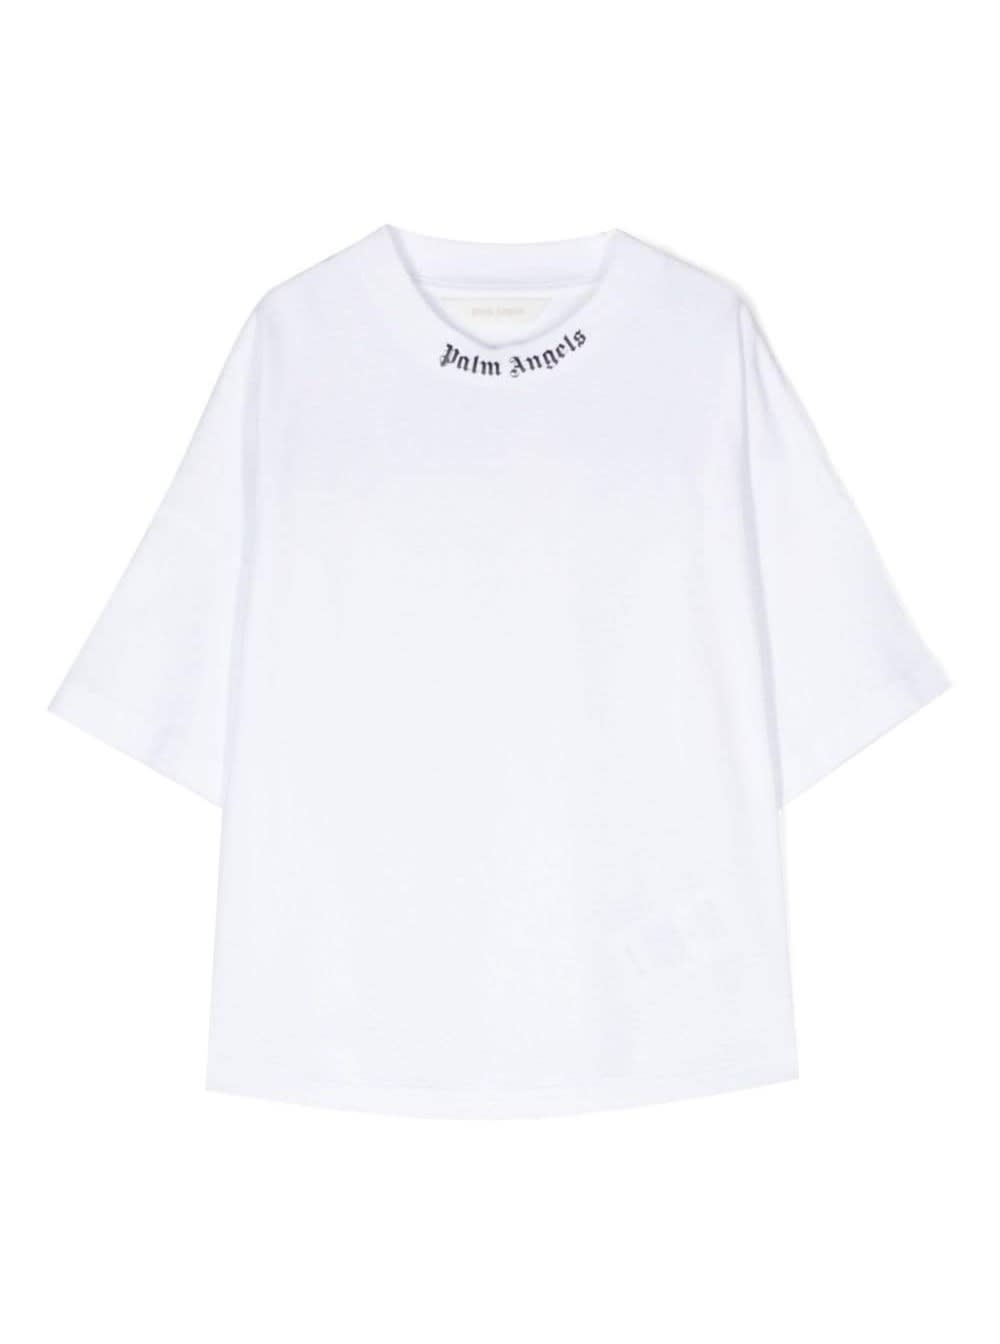 Palm Angels Classic Overlogo T-shirt S/s White Black